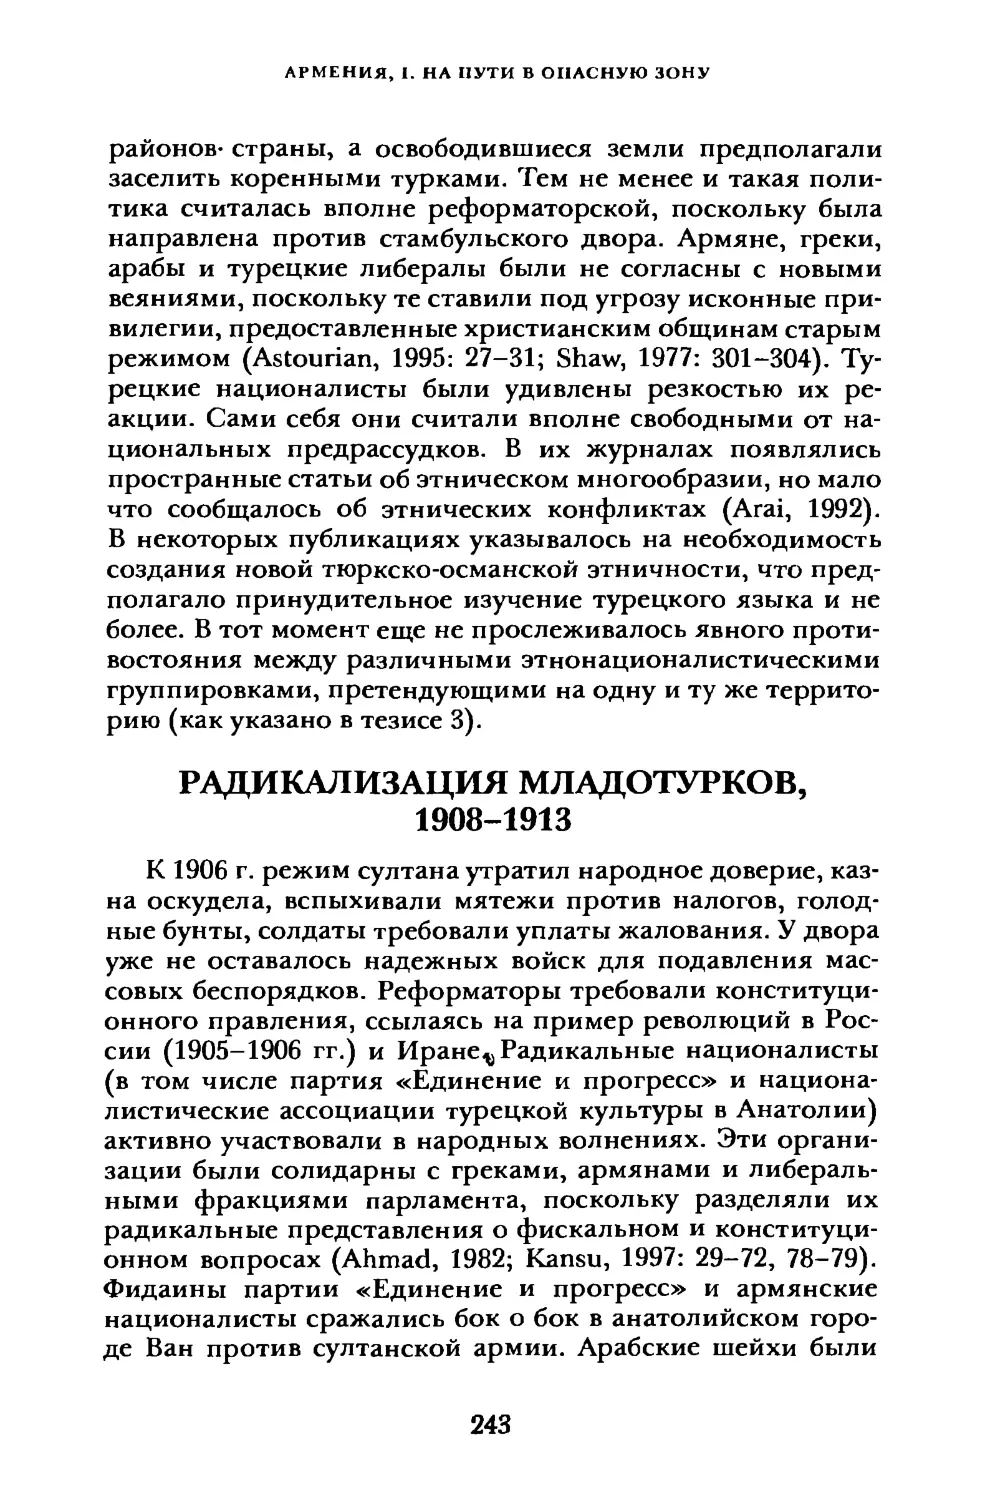 РАДИКАЛИЗАЦИЯ МЛАДОТУРКОВ, 1908-1913